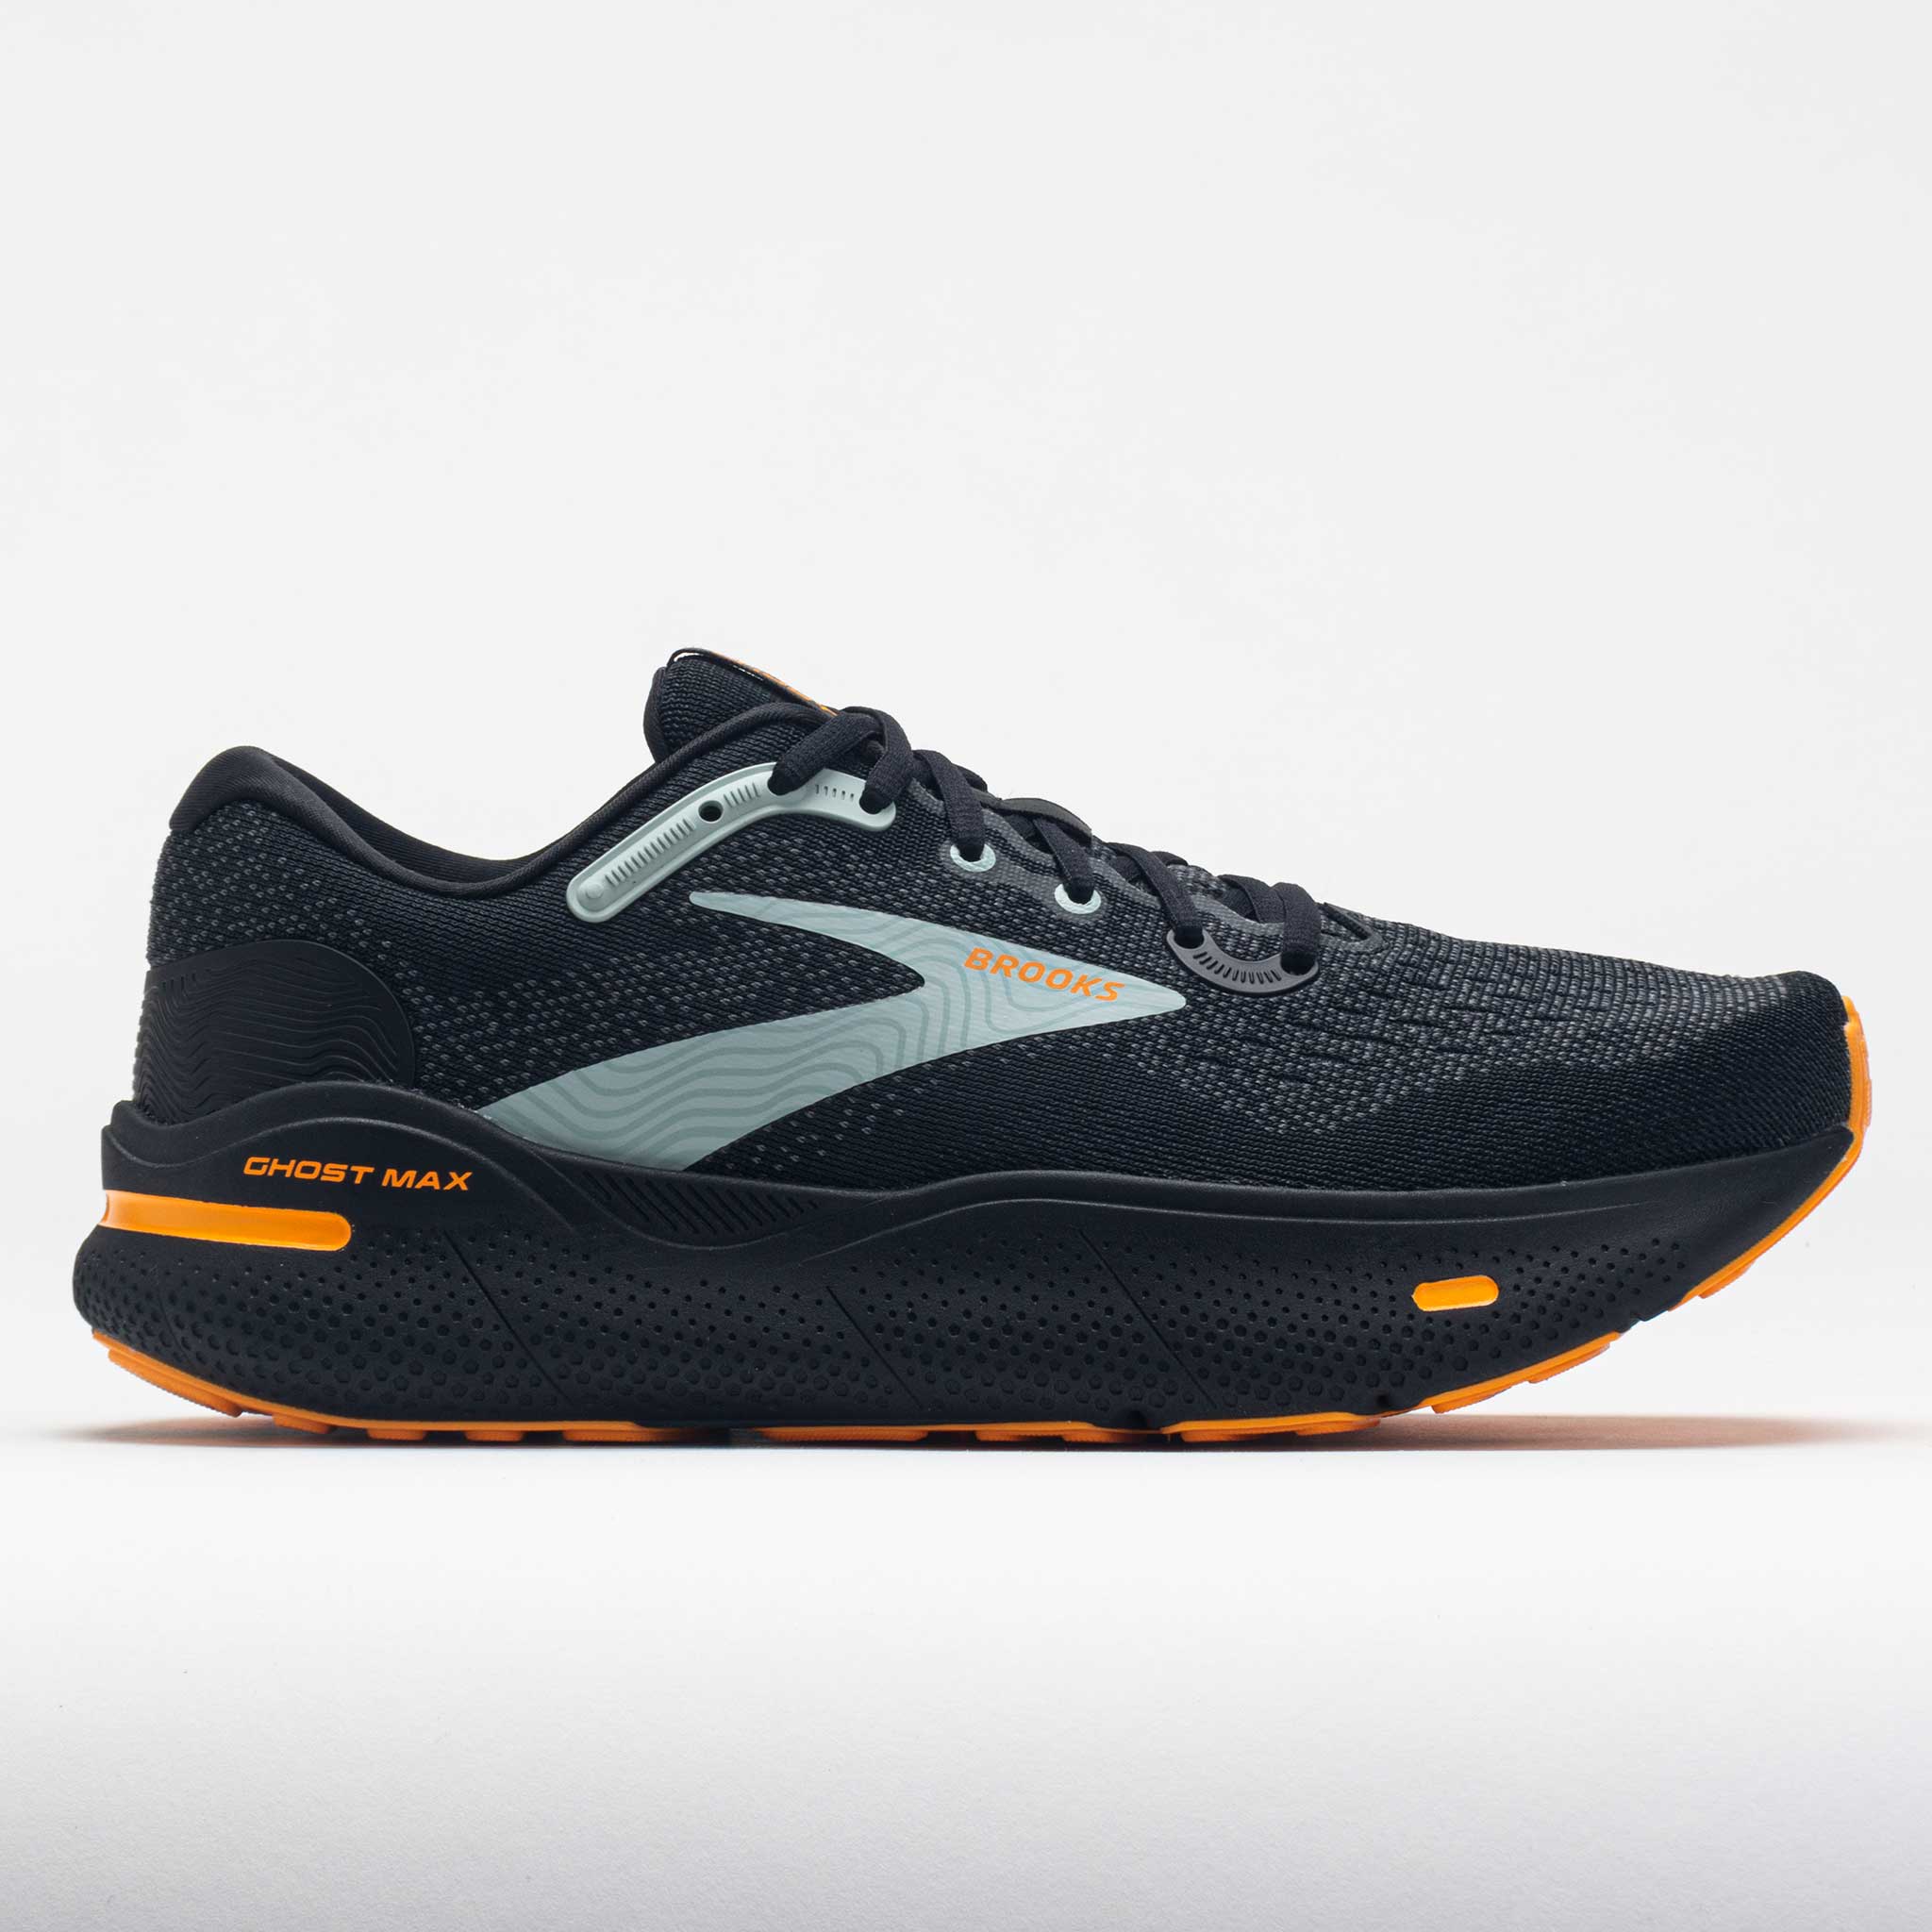 Brooks Ghost Max Men's Running Shoes Black/Orange/Cloud Blue Size 9.5 Width D - Medium